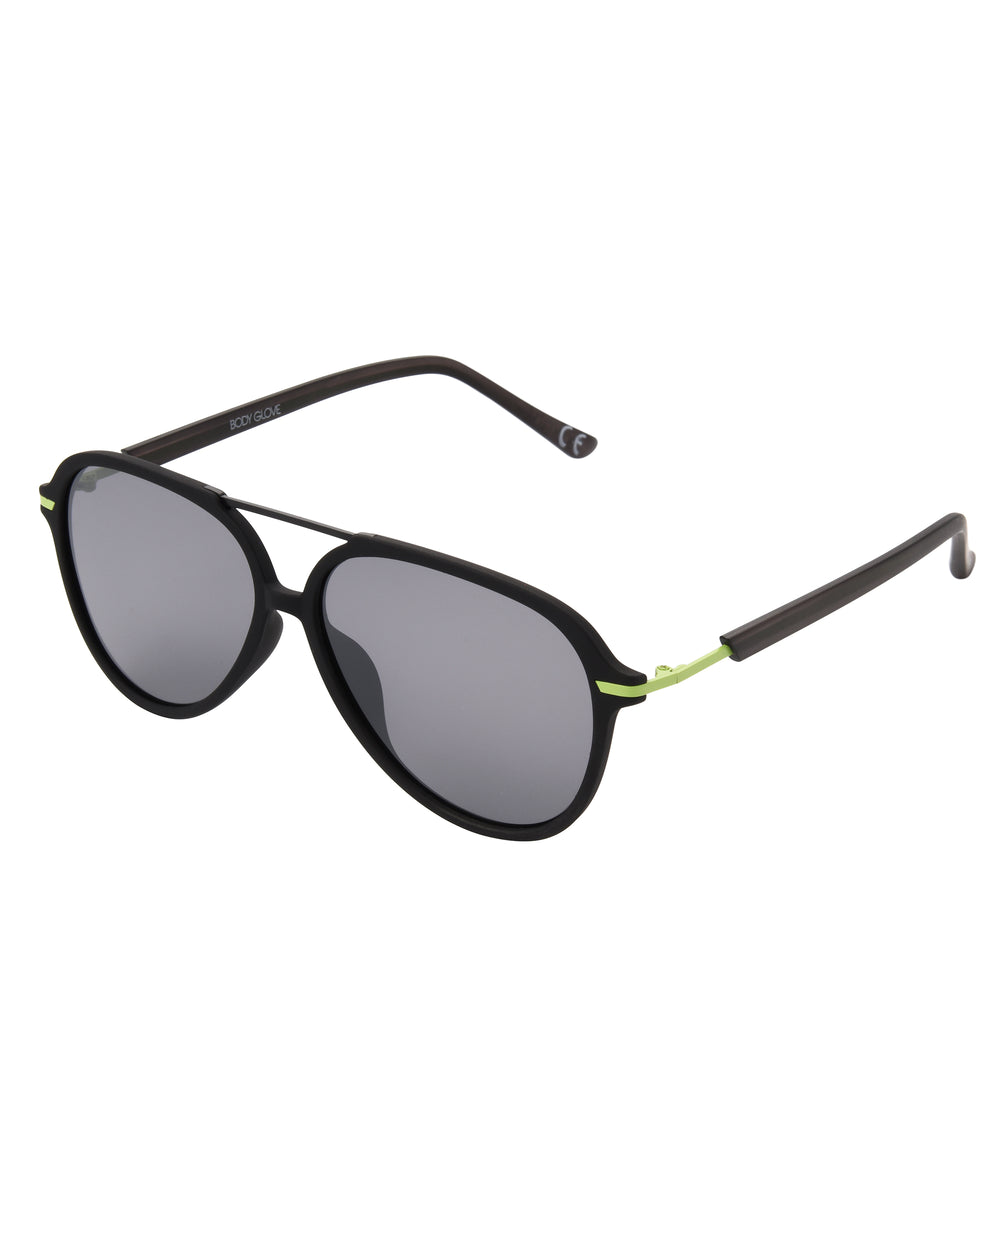 Backdoor Polarized Aviator Sunglasses - Black/Neon Citron